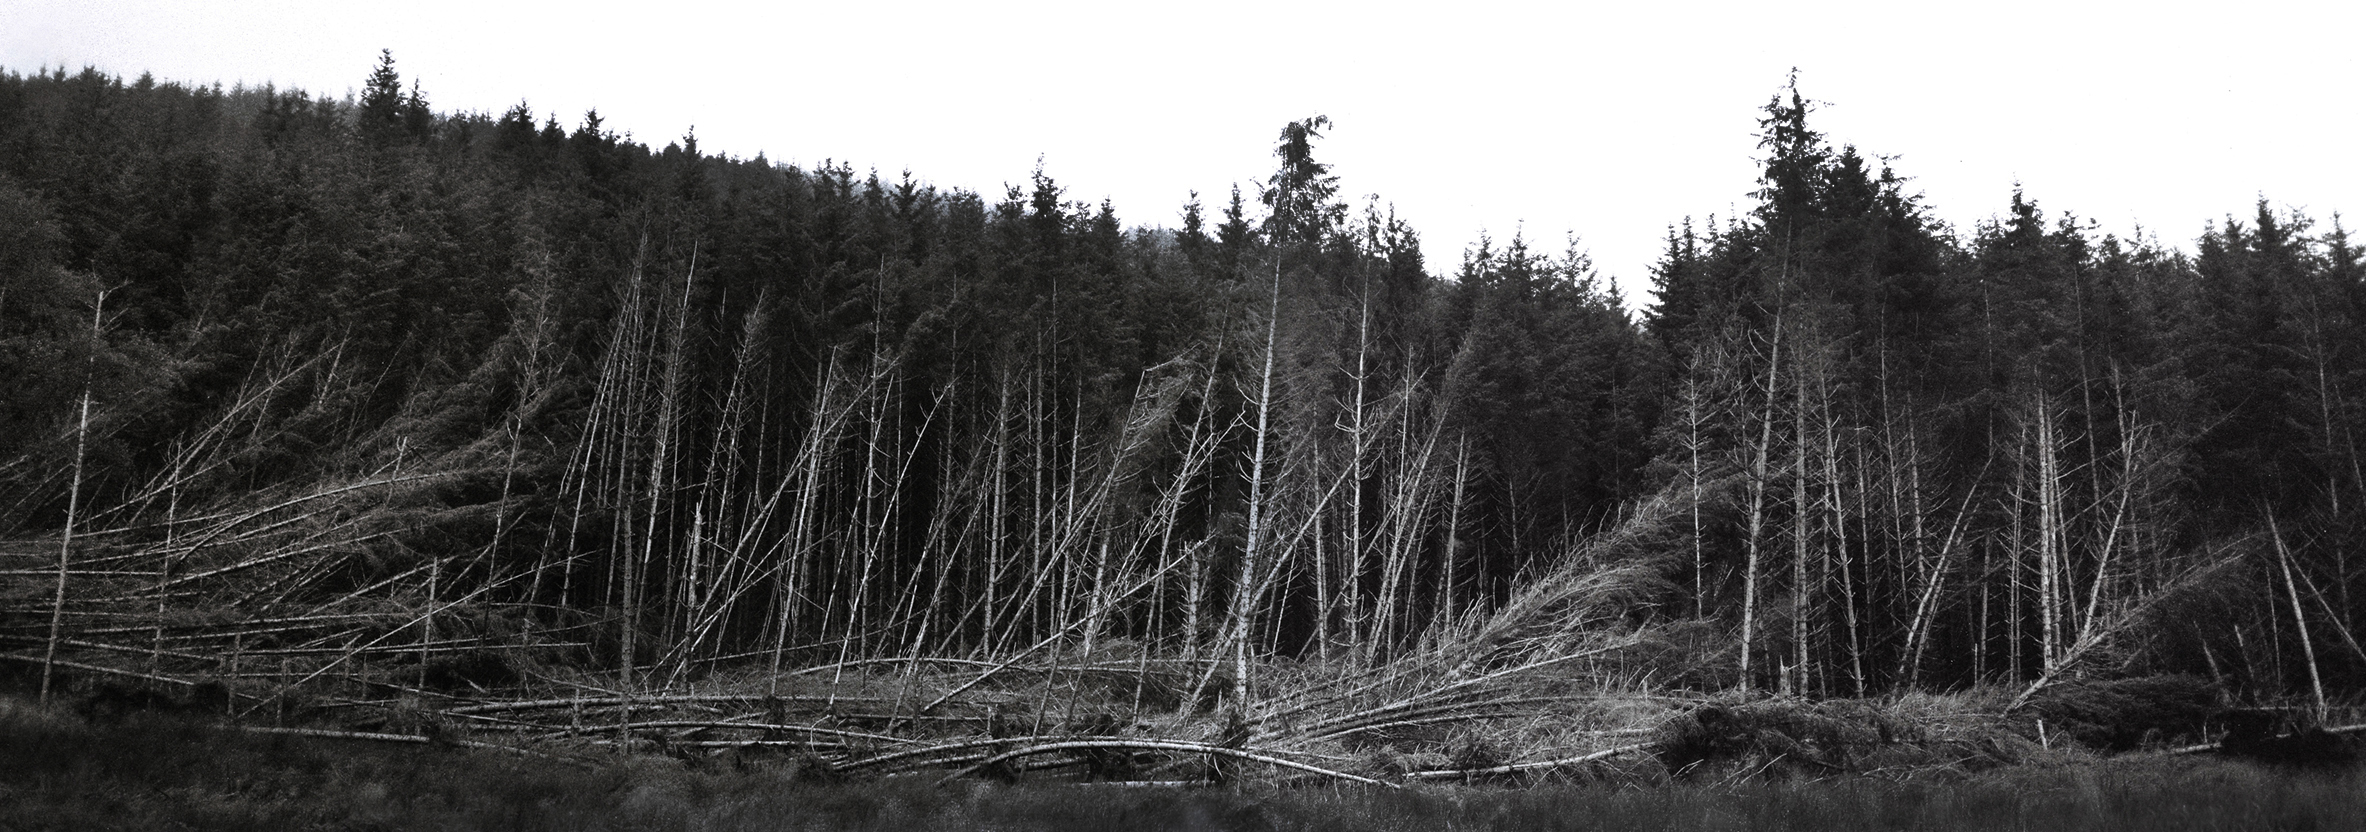  Fallen trees. Tayvallich, Scotland. 2017 